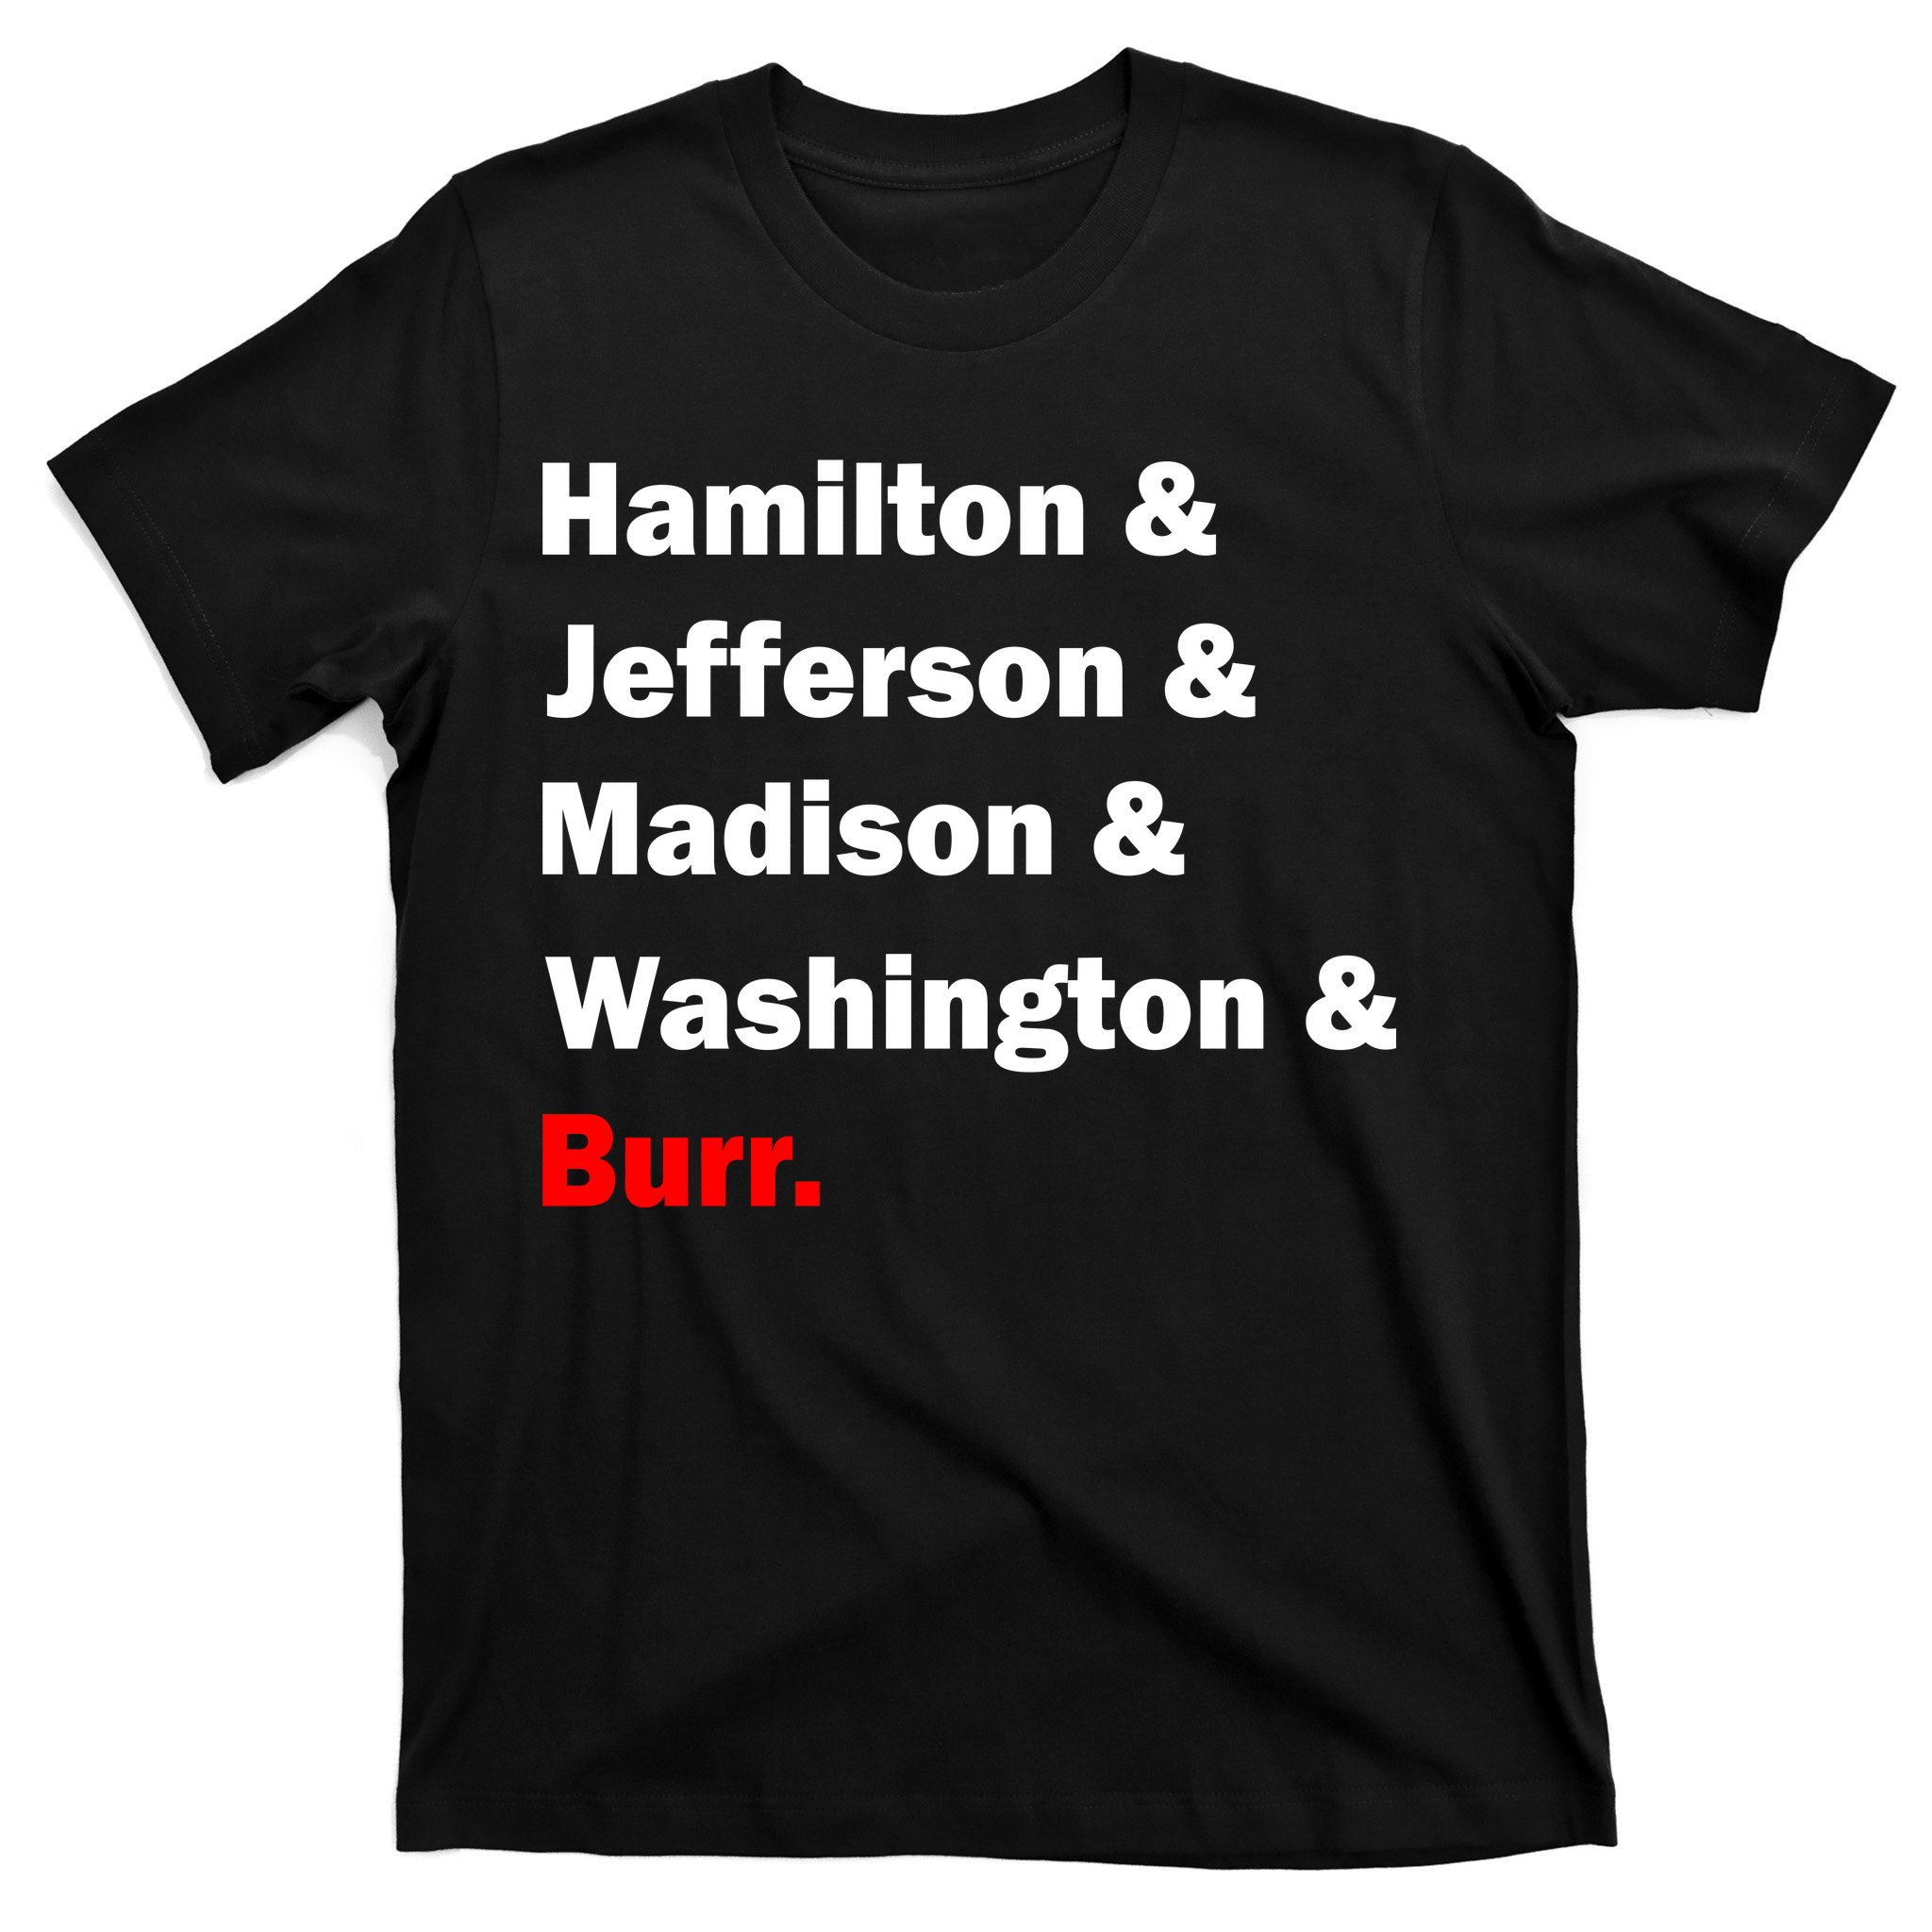 Washington Capitals Player Shirt T-Shirt by Joe Hamilton